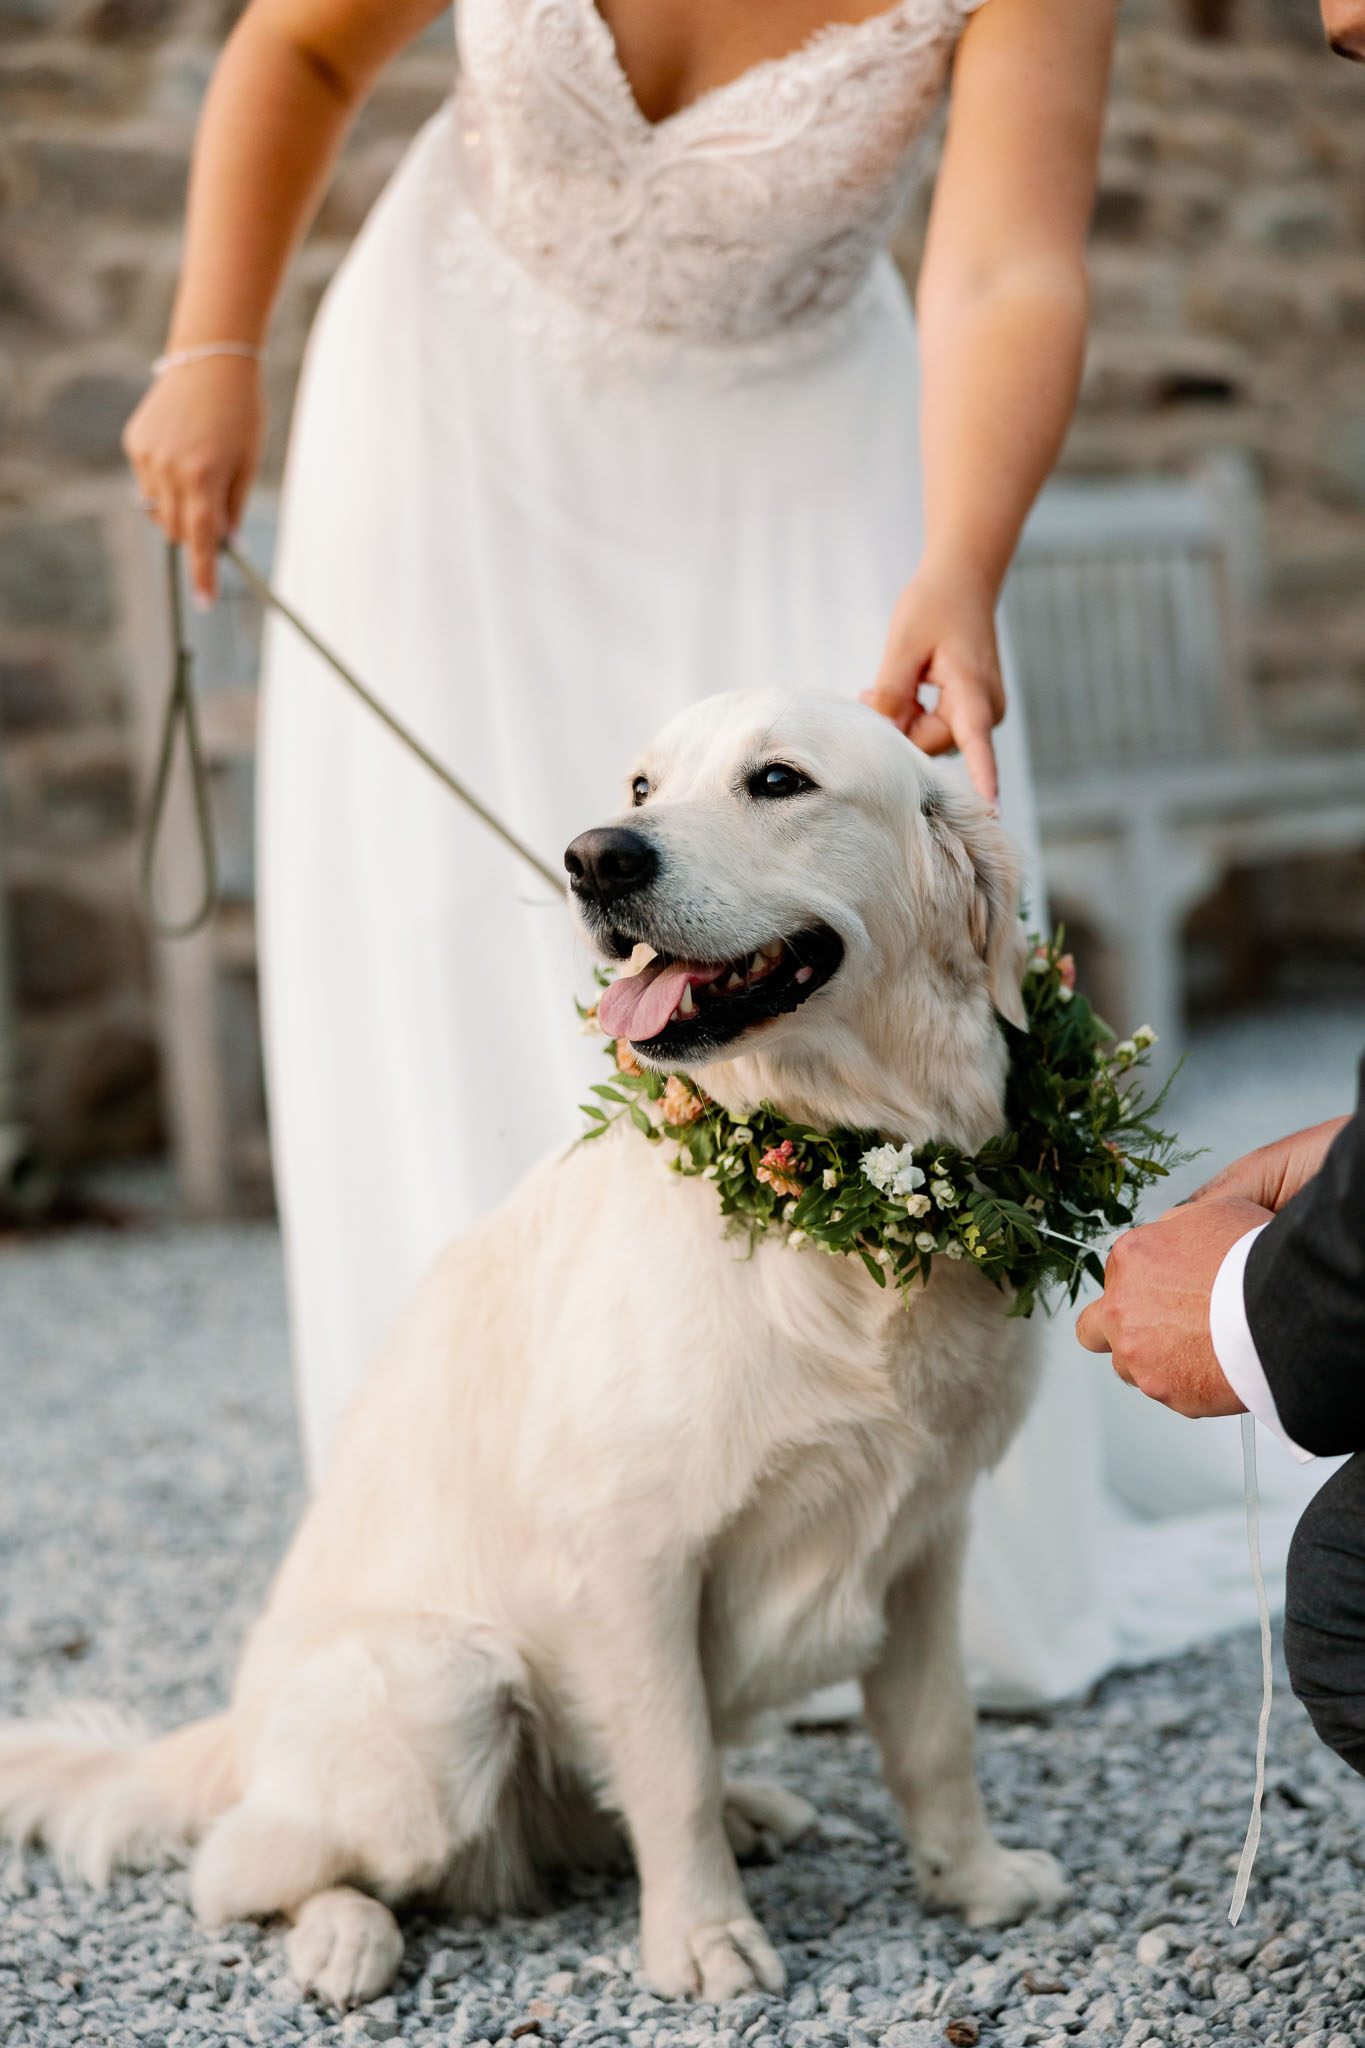 Dogs at Weddings in a barn wedding venue 